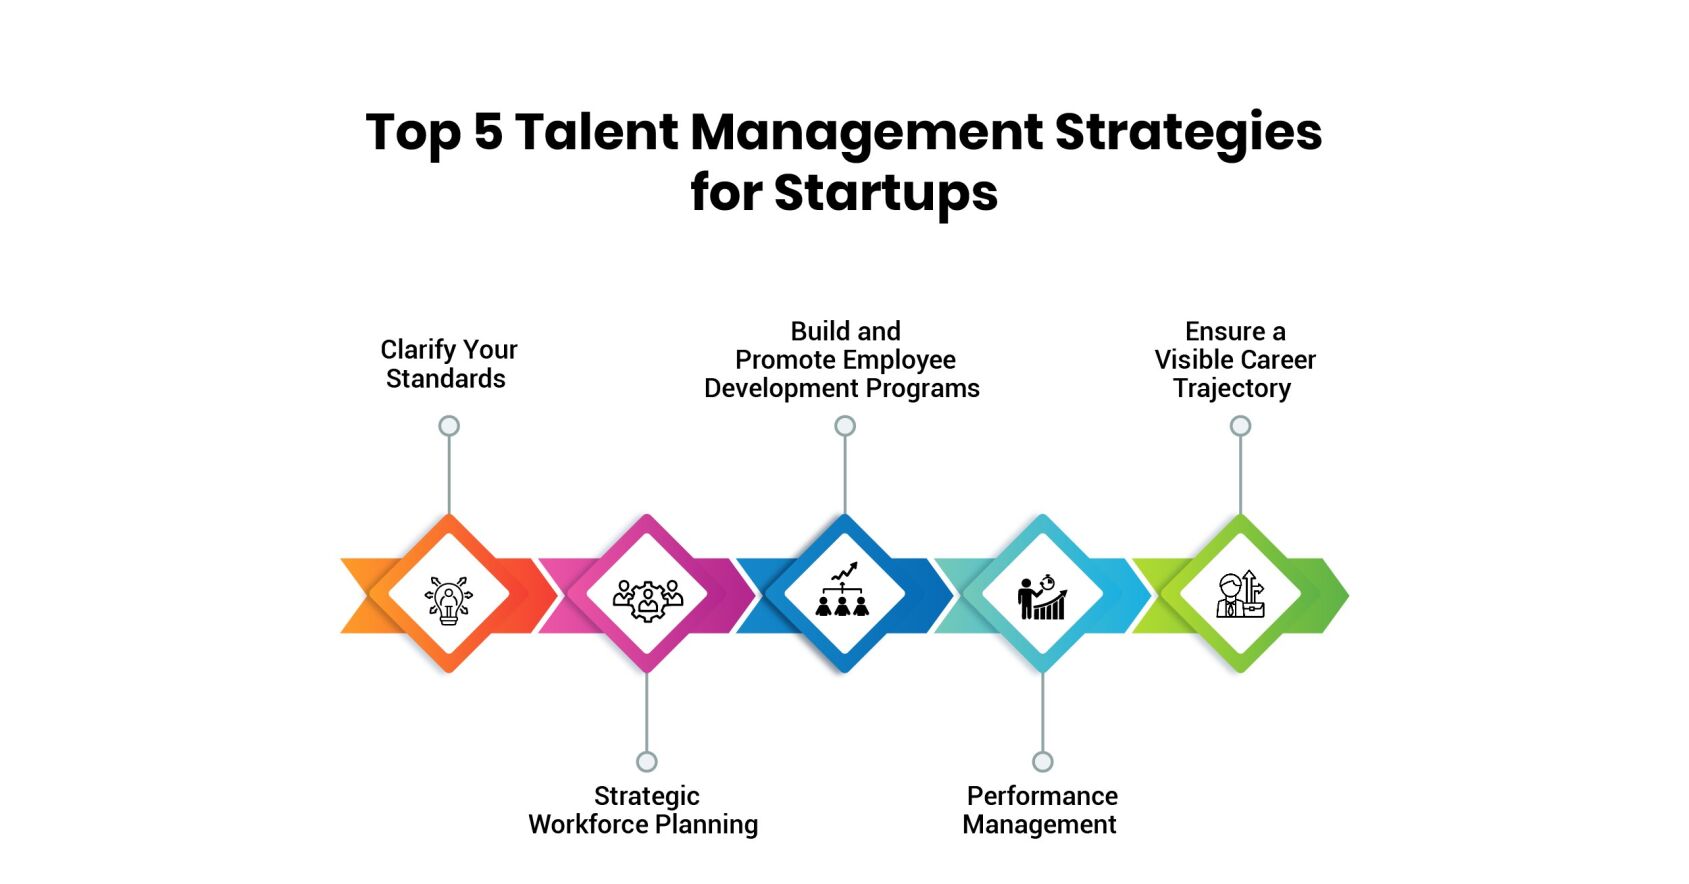 Top 5 Talent Management Strategies for Startups